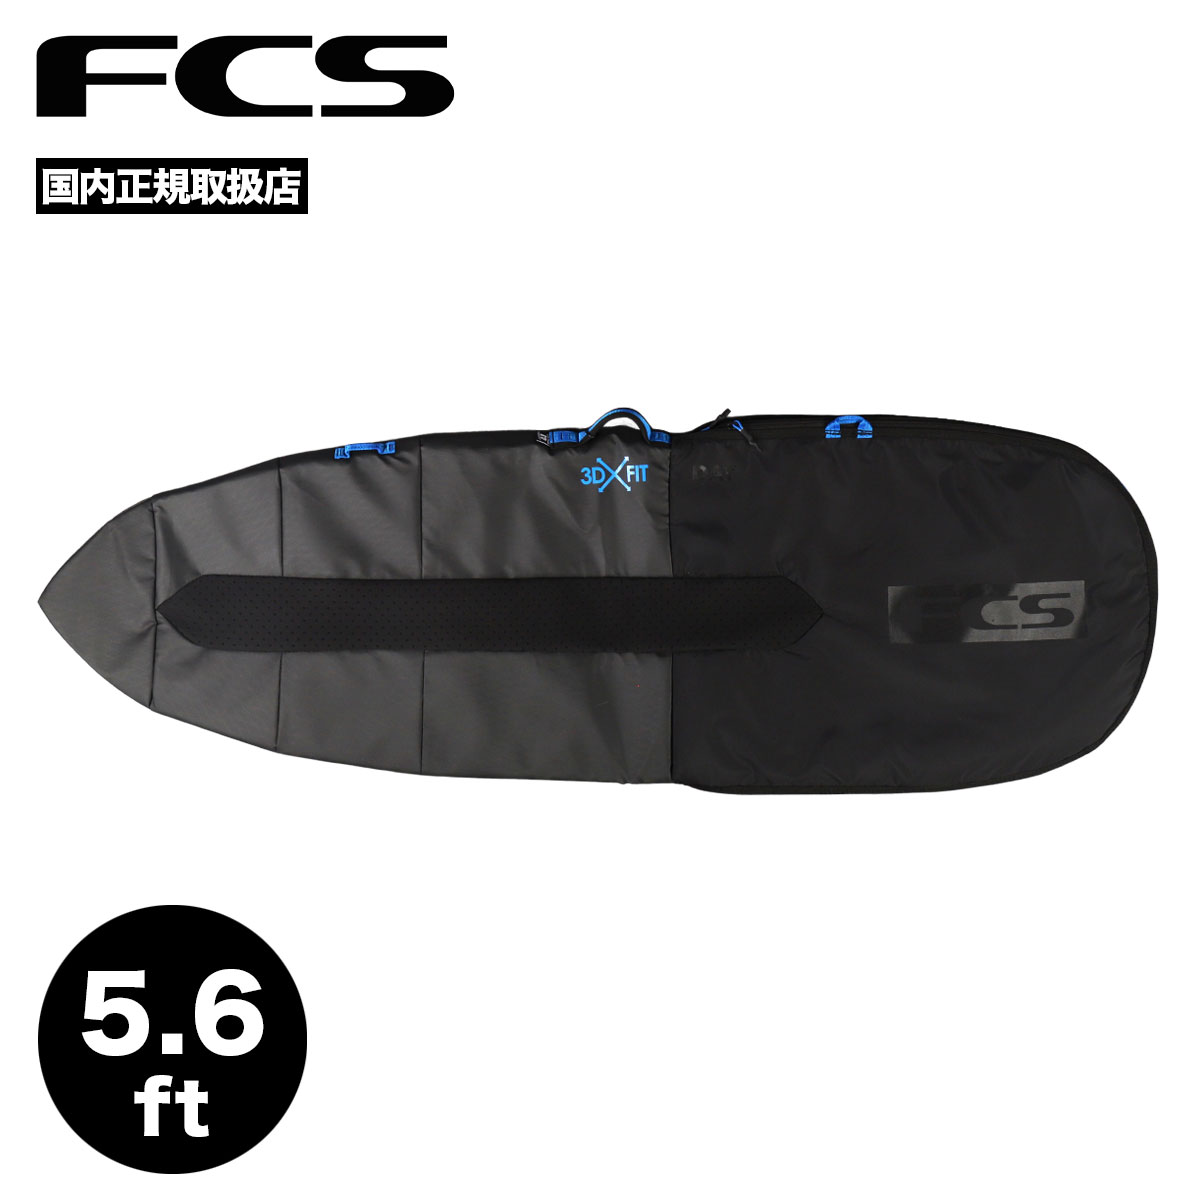 SurfBoardNet / FCS エフシーエス サーフィン ハードケース 5.6 デイ